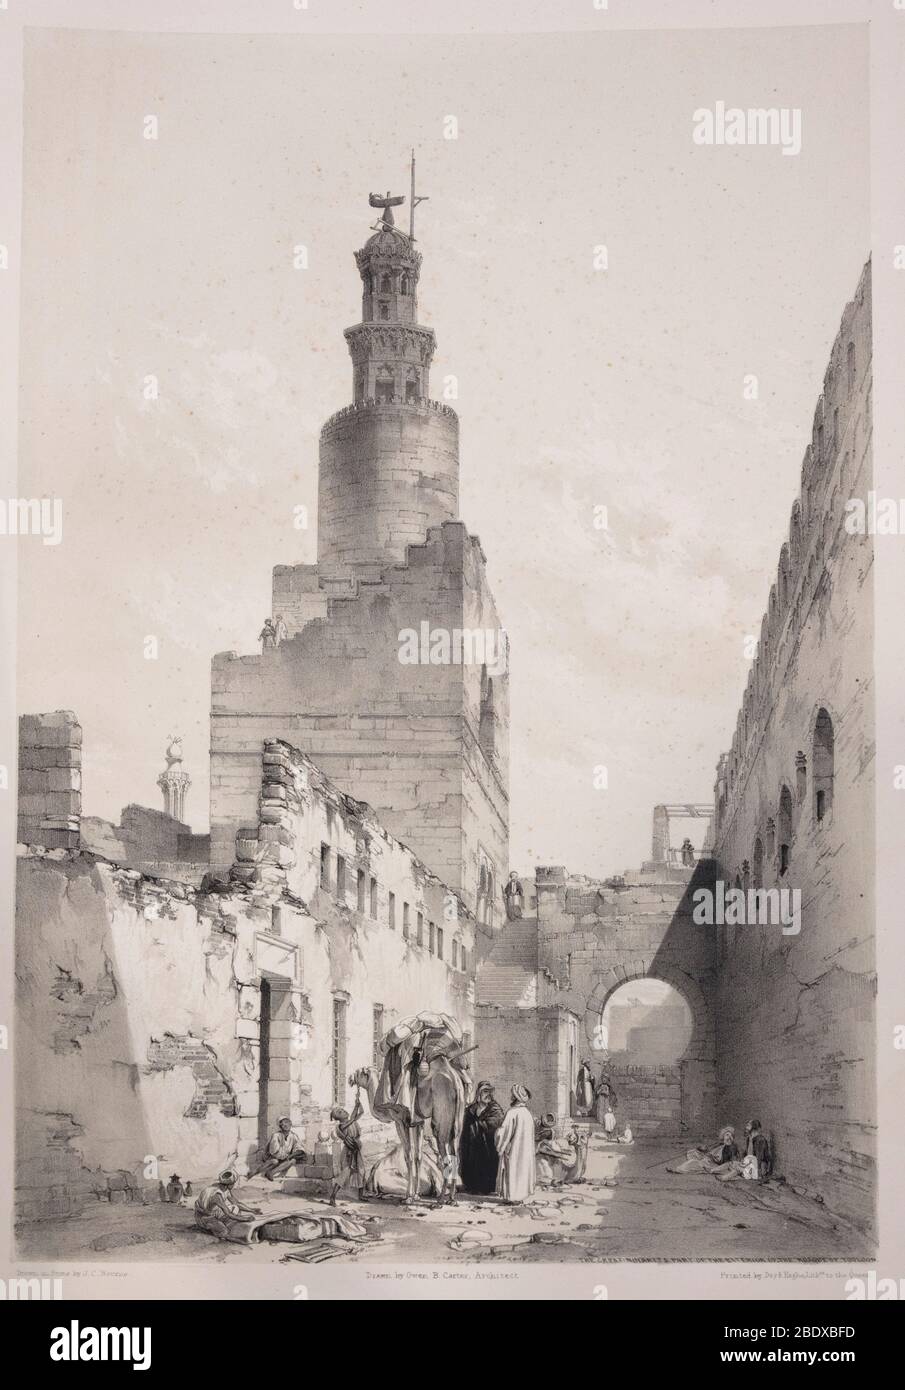 Minaret de la mosquée d'Ibn Tulun, Robert Hay, illustrations du Caire, Londres, 1840 Banque D'Images